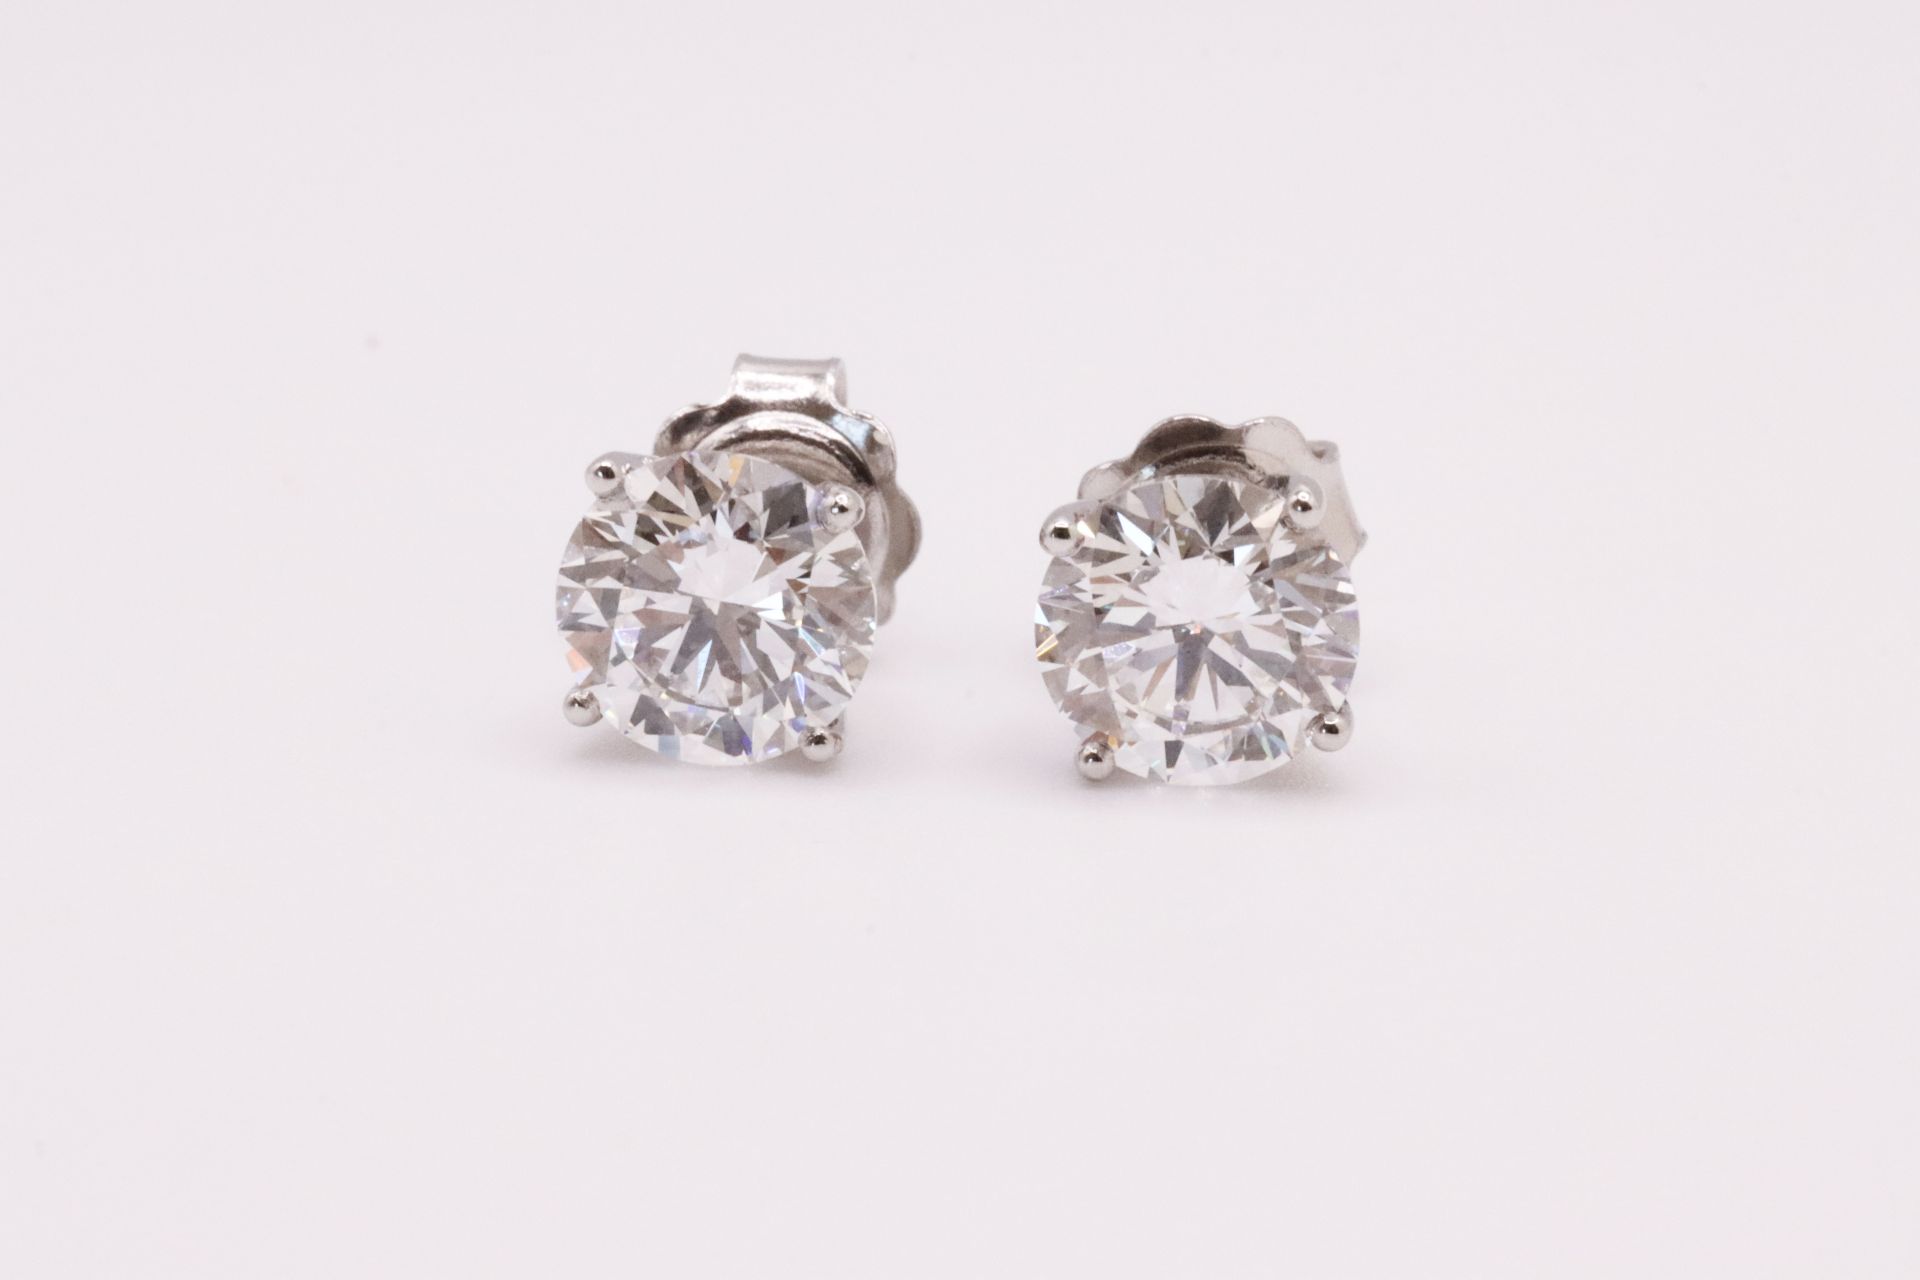 Round Brilliant Cut 2.00 Carat Diamond Earrings Set in 18kt White Gold - F Colour VVS2 Clarity - IGI - Image 3 of 5